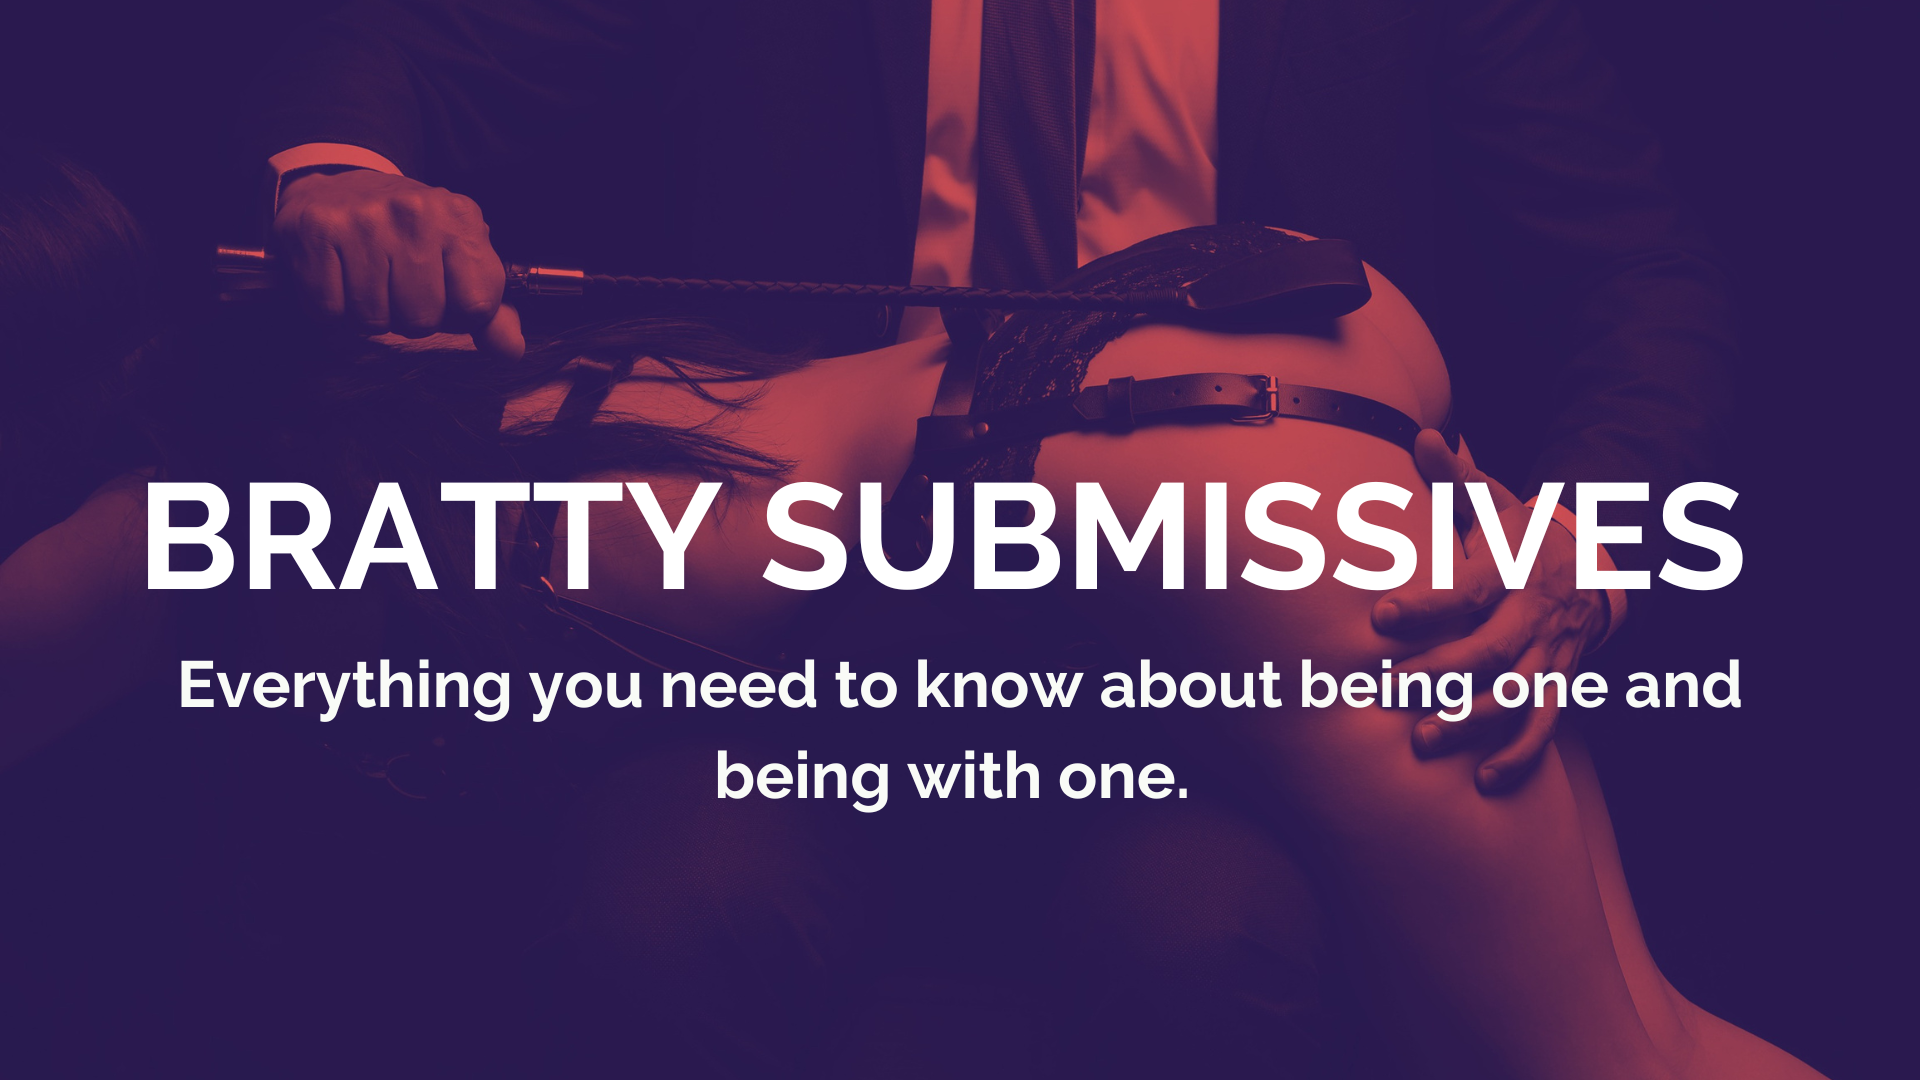 bratty submissive